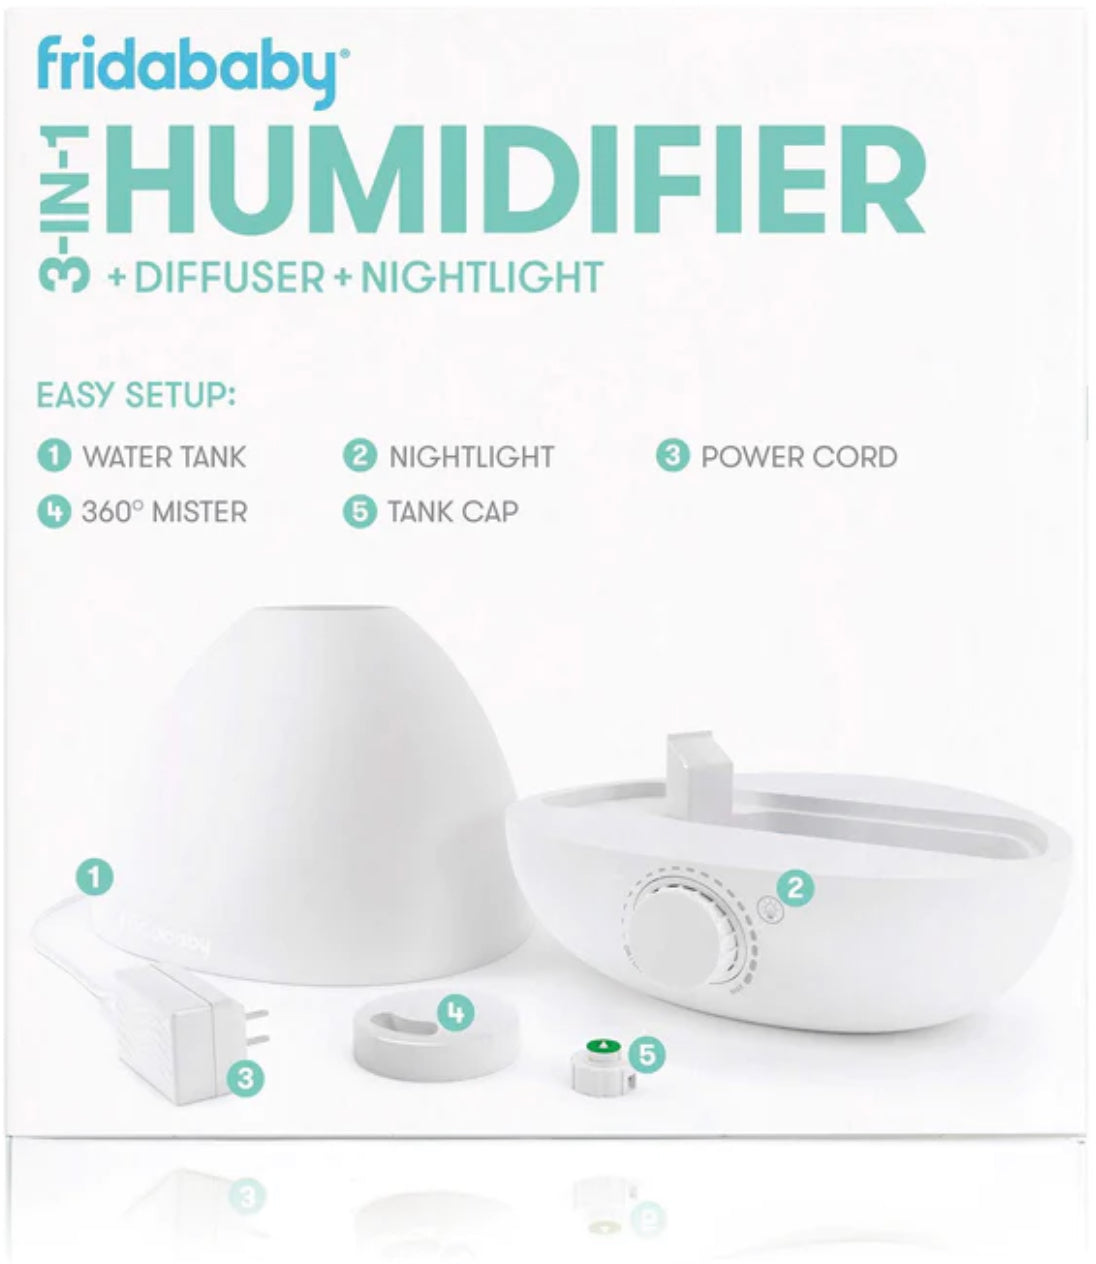 Fridababy humidifier